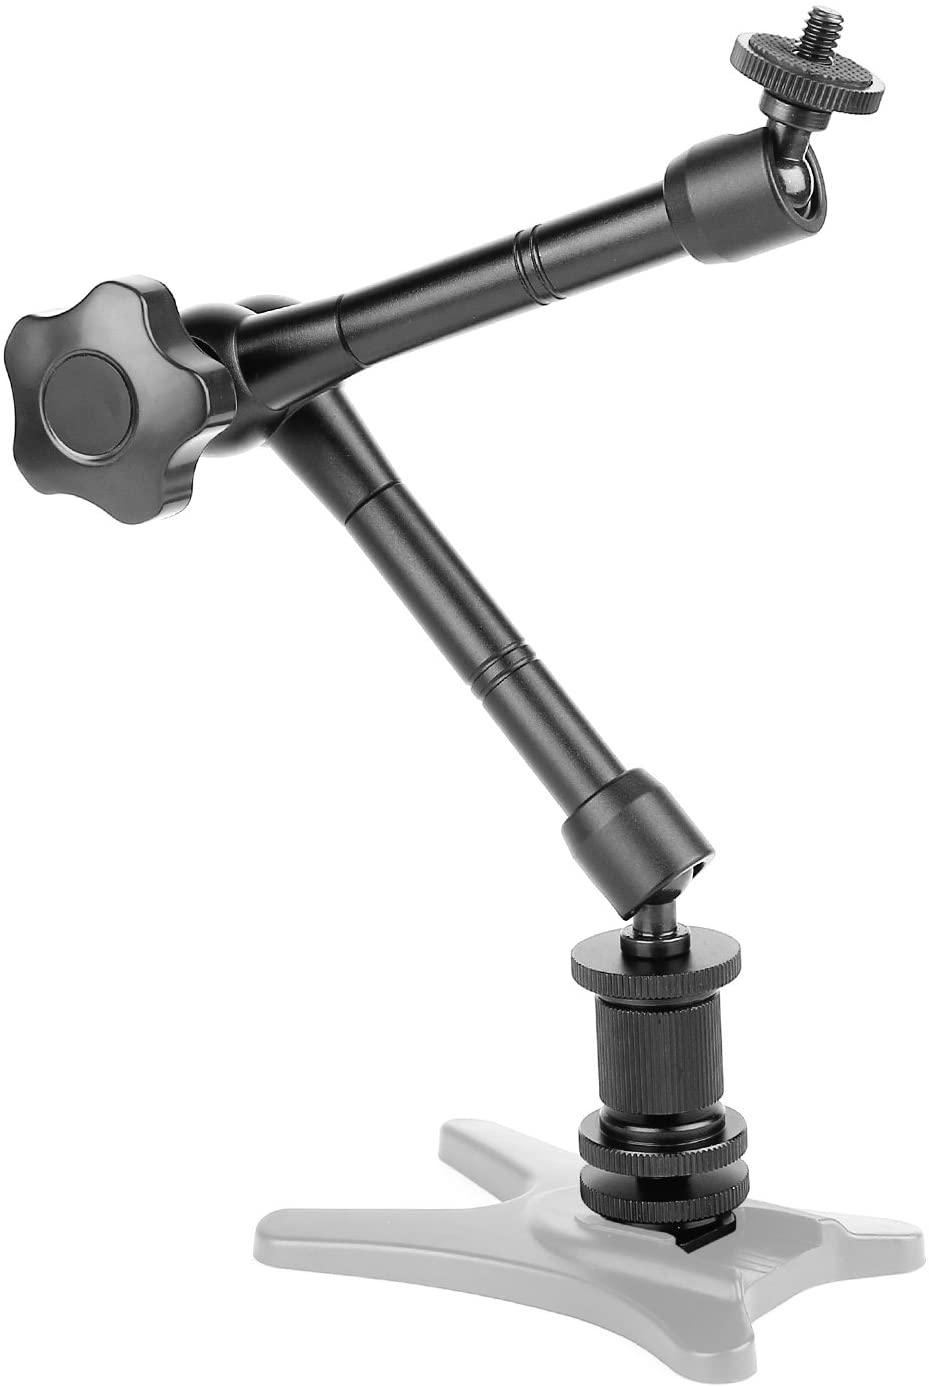 Selens 11-inch Magic Arm with Hotshoe for Cameras Camera tek